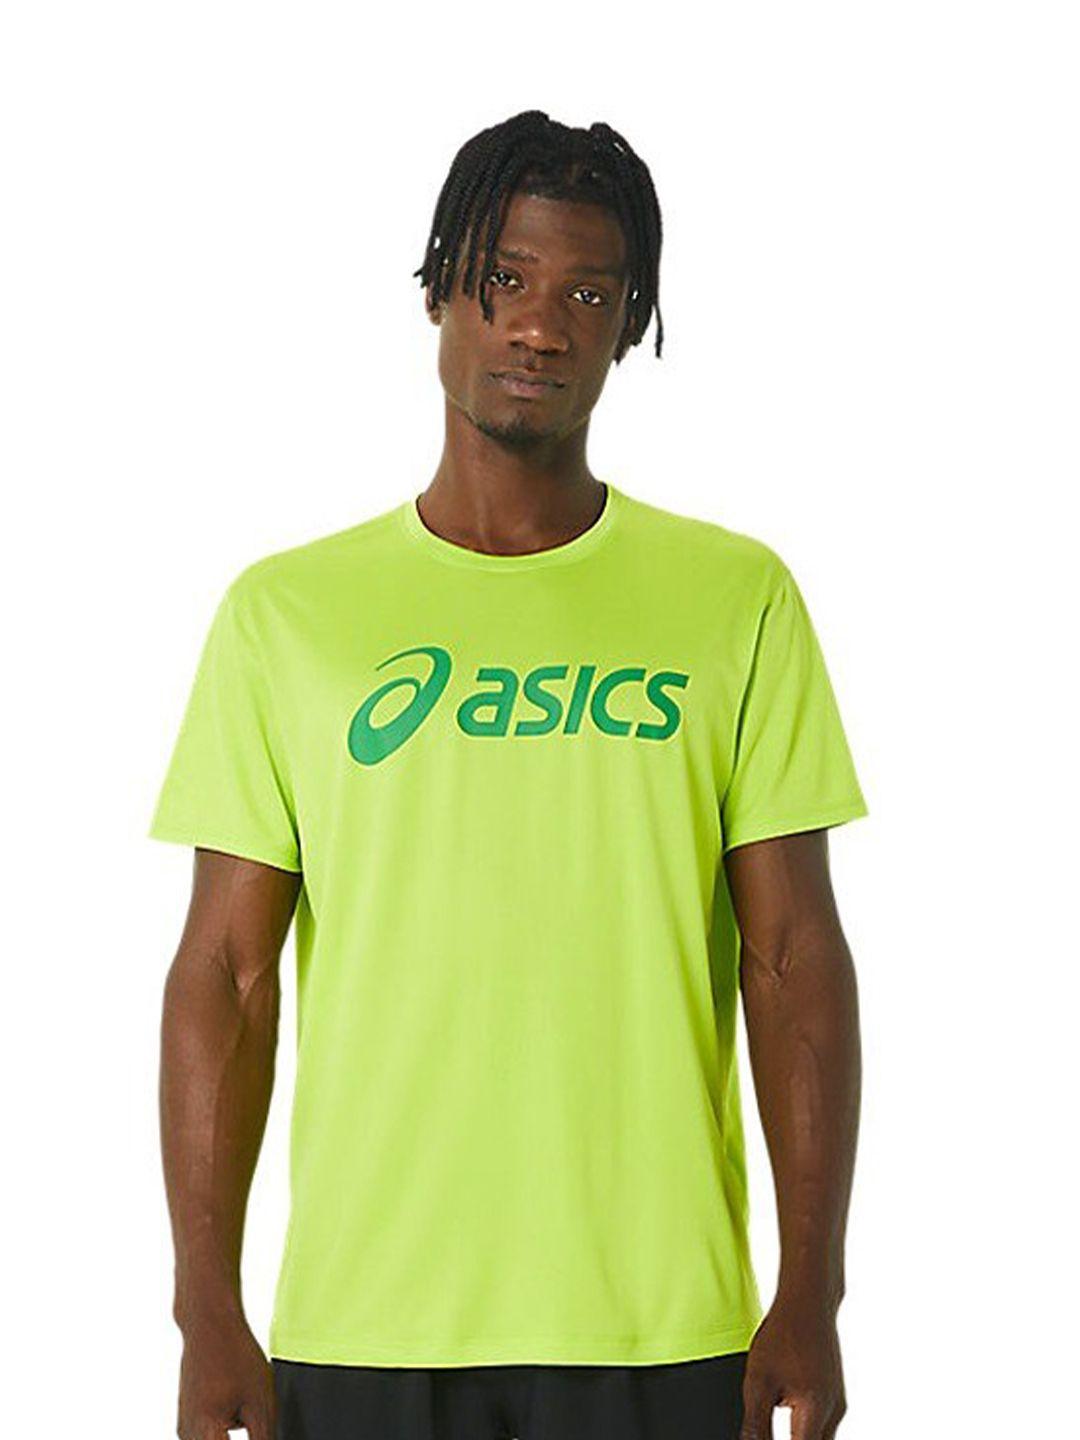 asics brand logo printed round neck t-shirt